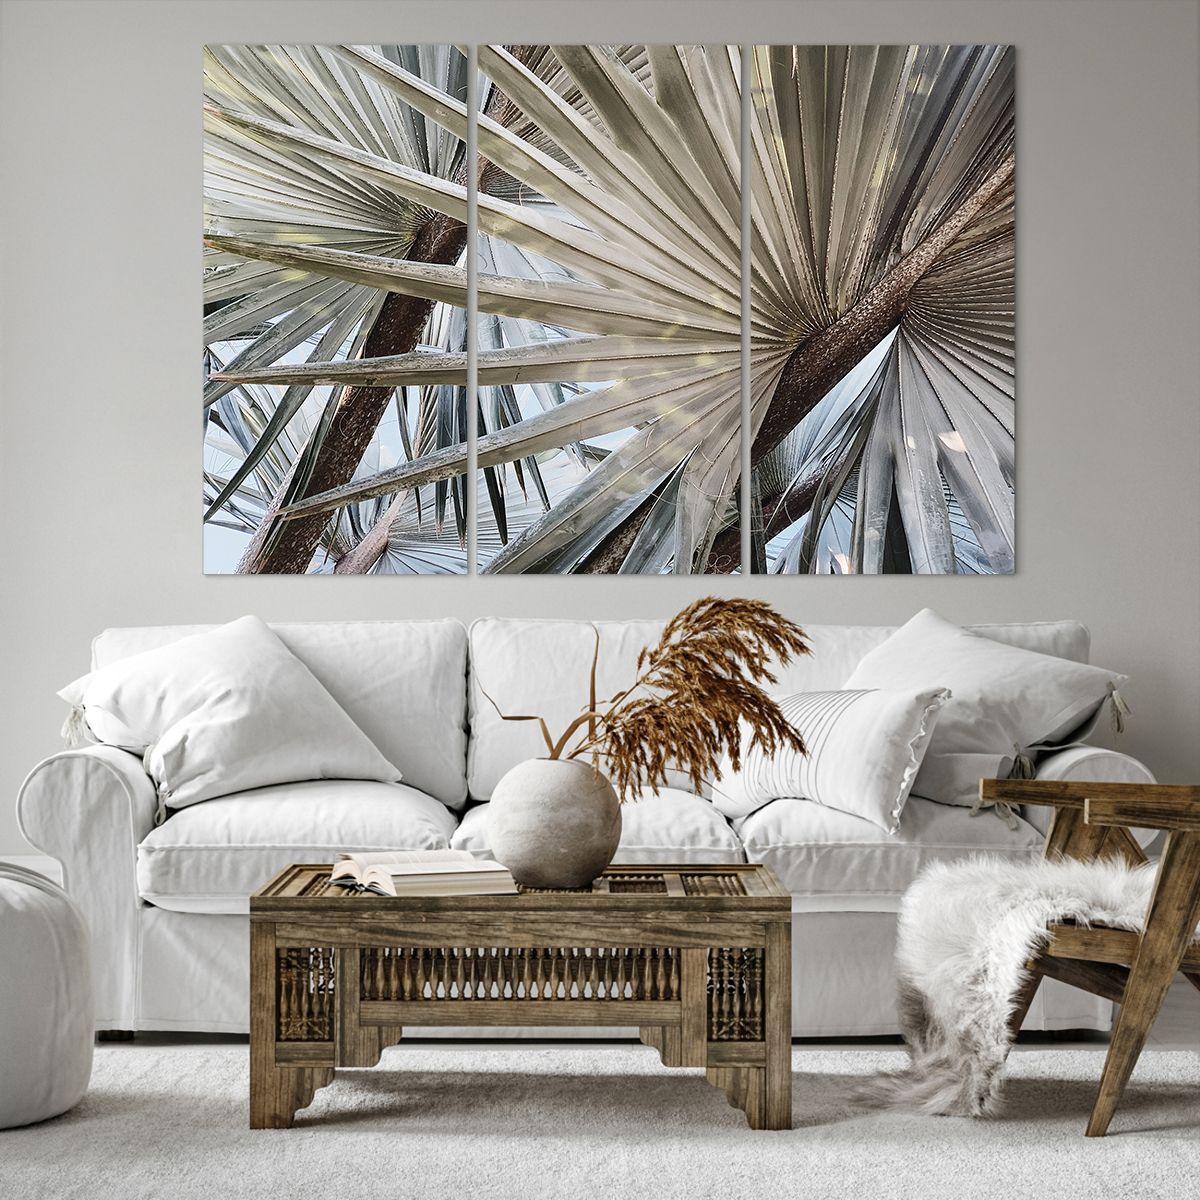 Bild auf Leinwand Palmblatt, Bild auf Leinwand Kokusnuss-Palme, Bild auf Leinwand Natur, Bild auf Leinwand Tropen, Bild auf Leinwand Exotische Pflanze